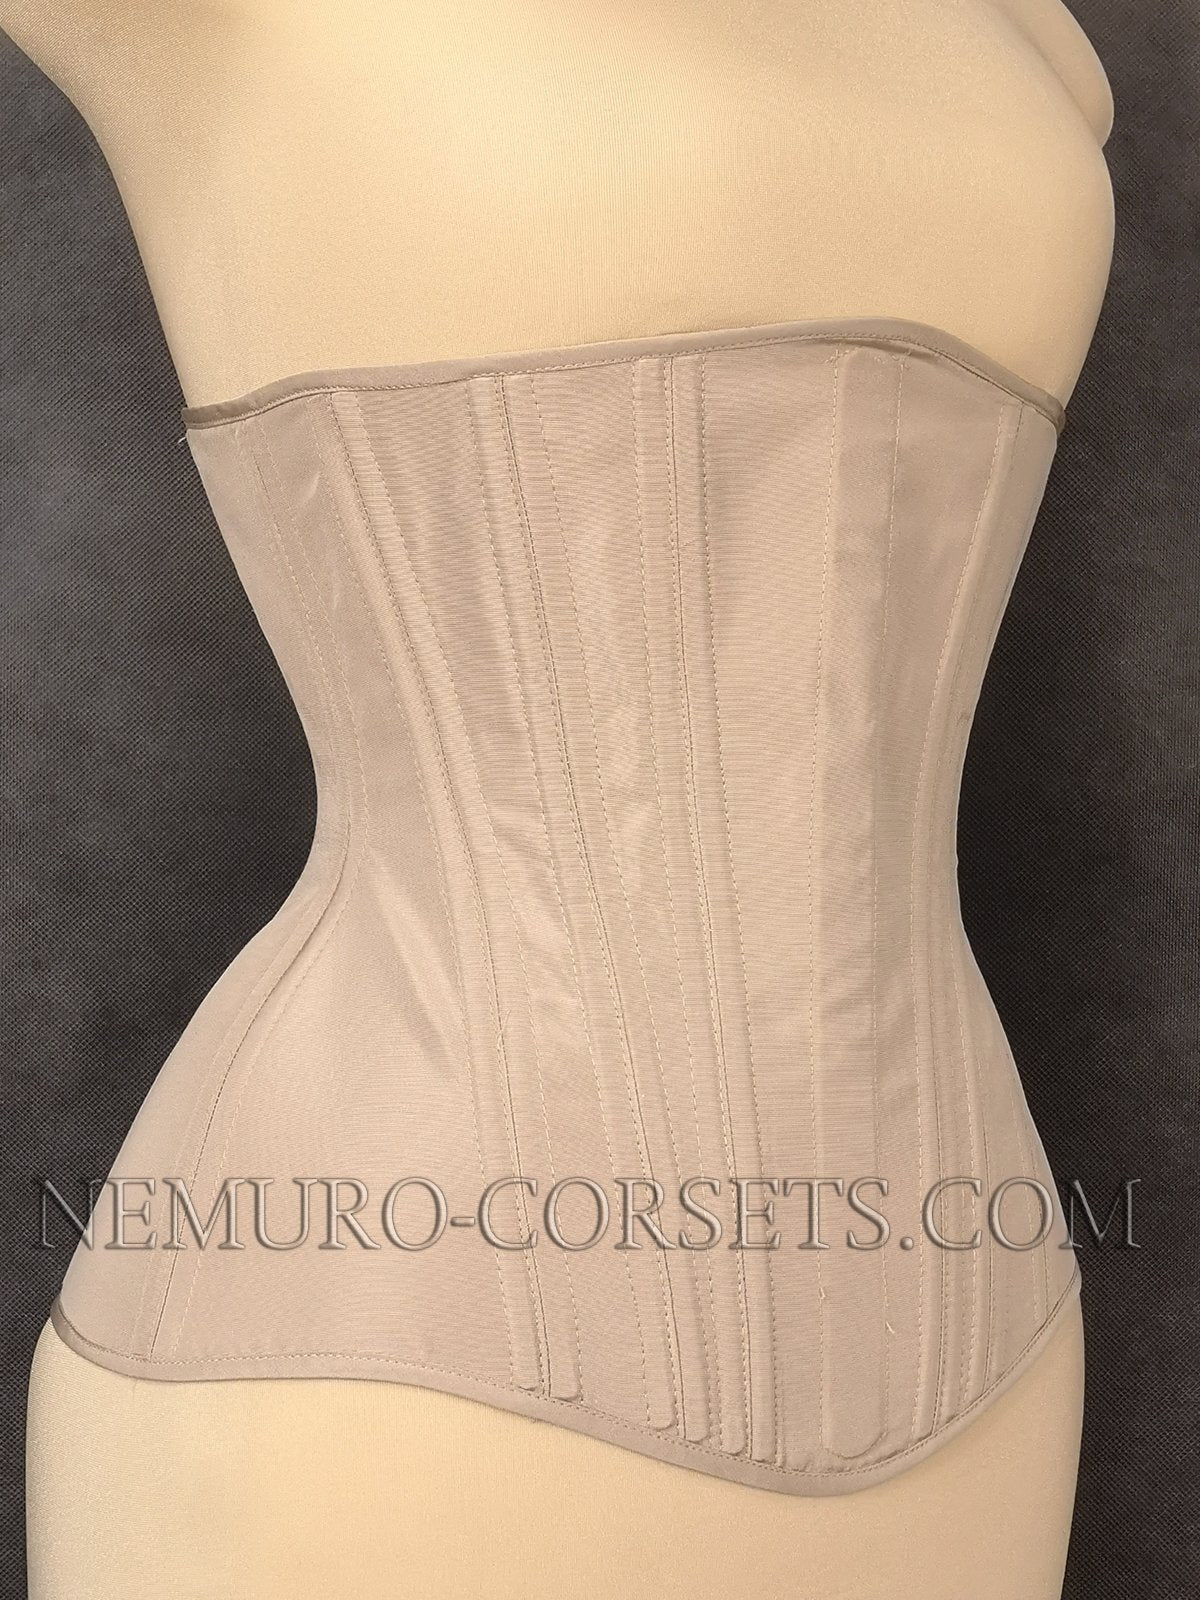 Classic Underbust corset solid front - Custom order Nemuro-Corsets